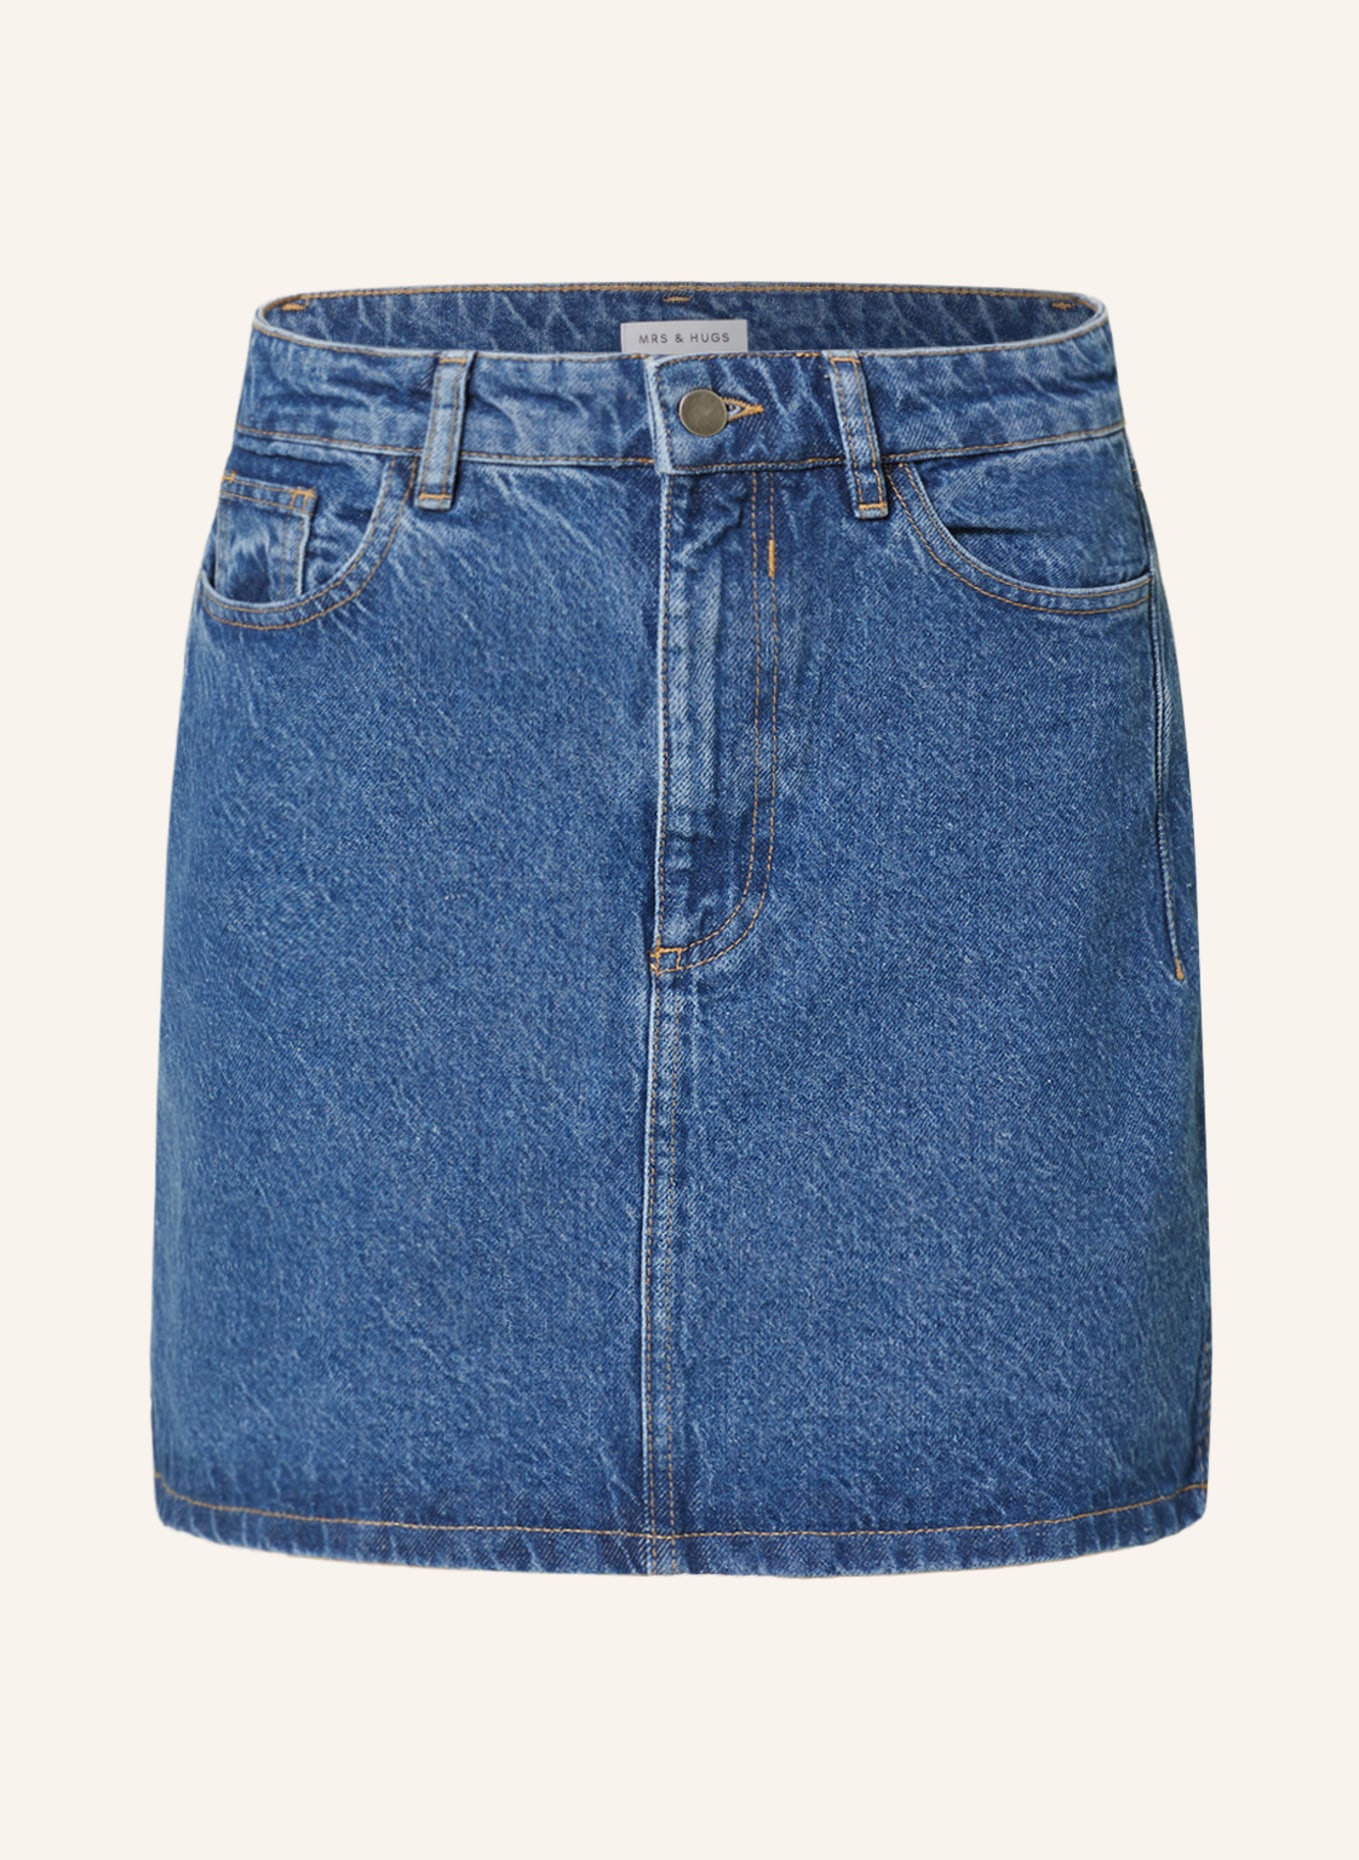 MRS & HUGS Denim skirt, Color: BLUE (Image 1)